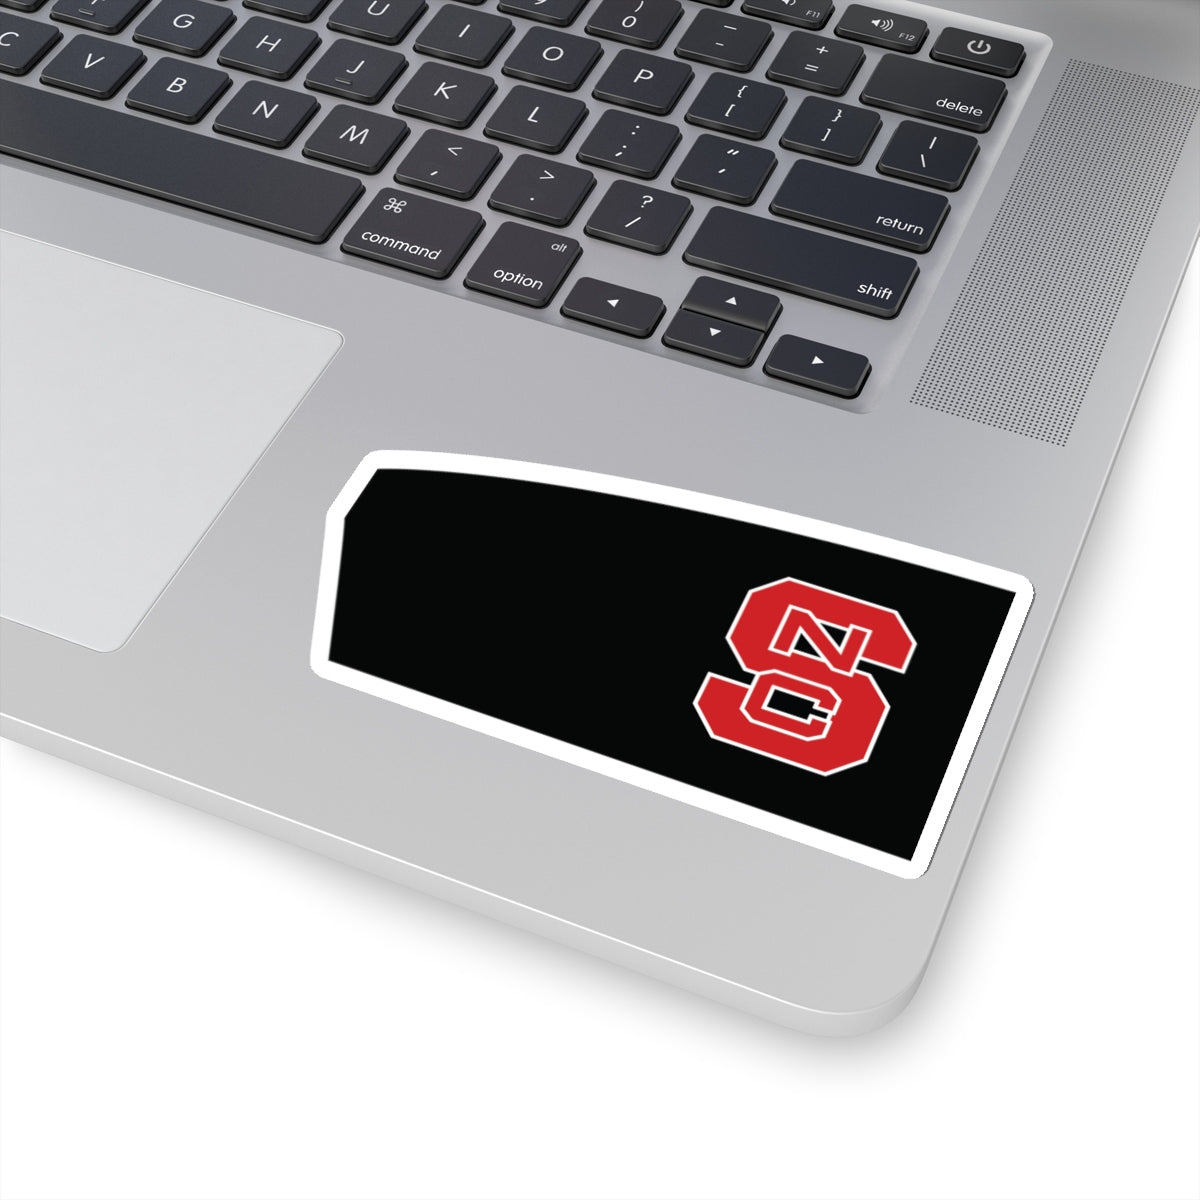 North Carolina State University Sticker